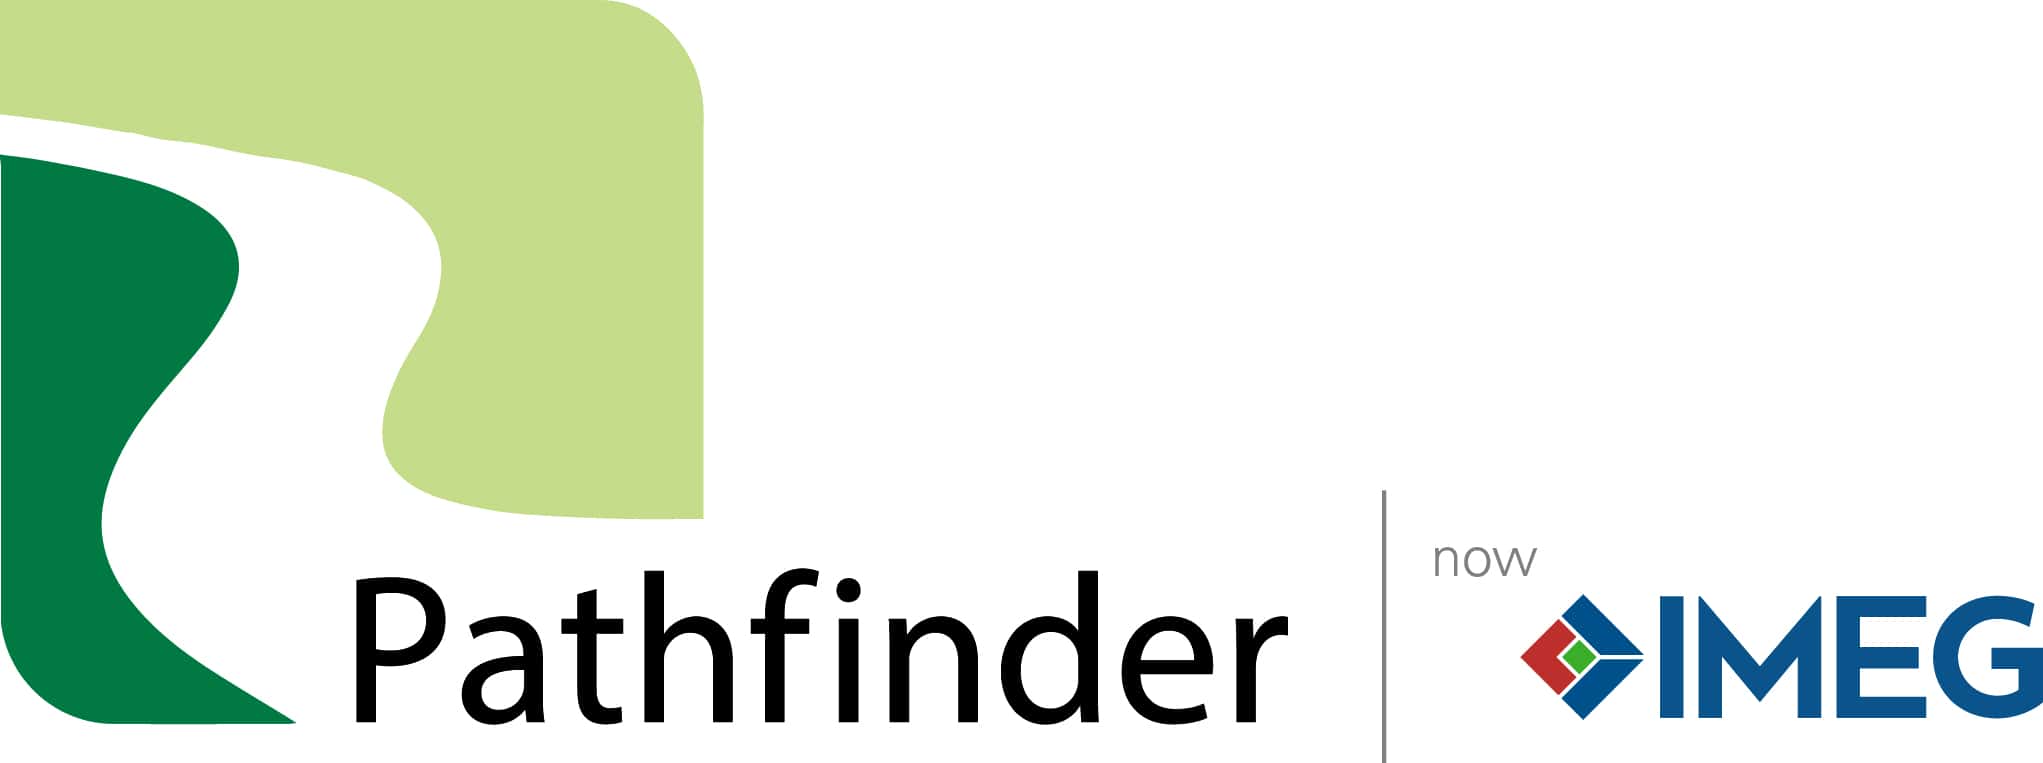 Pathfinder Joins IMEG